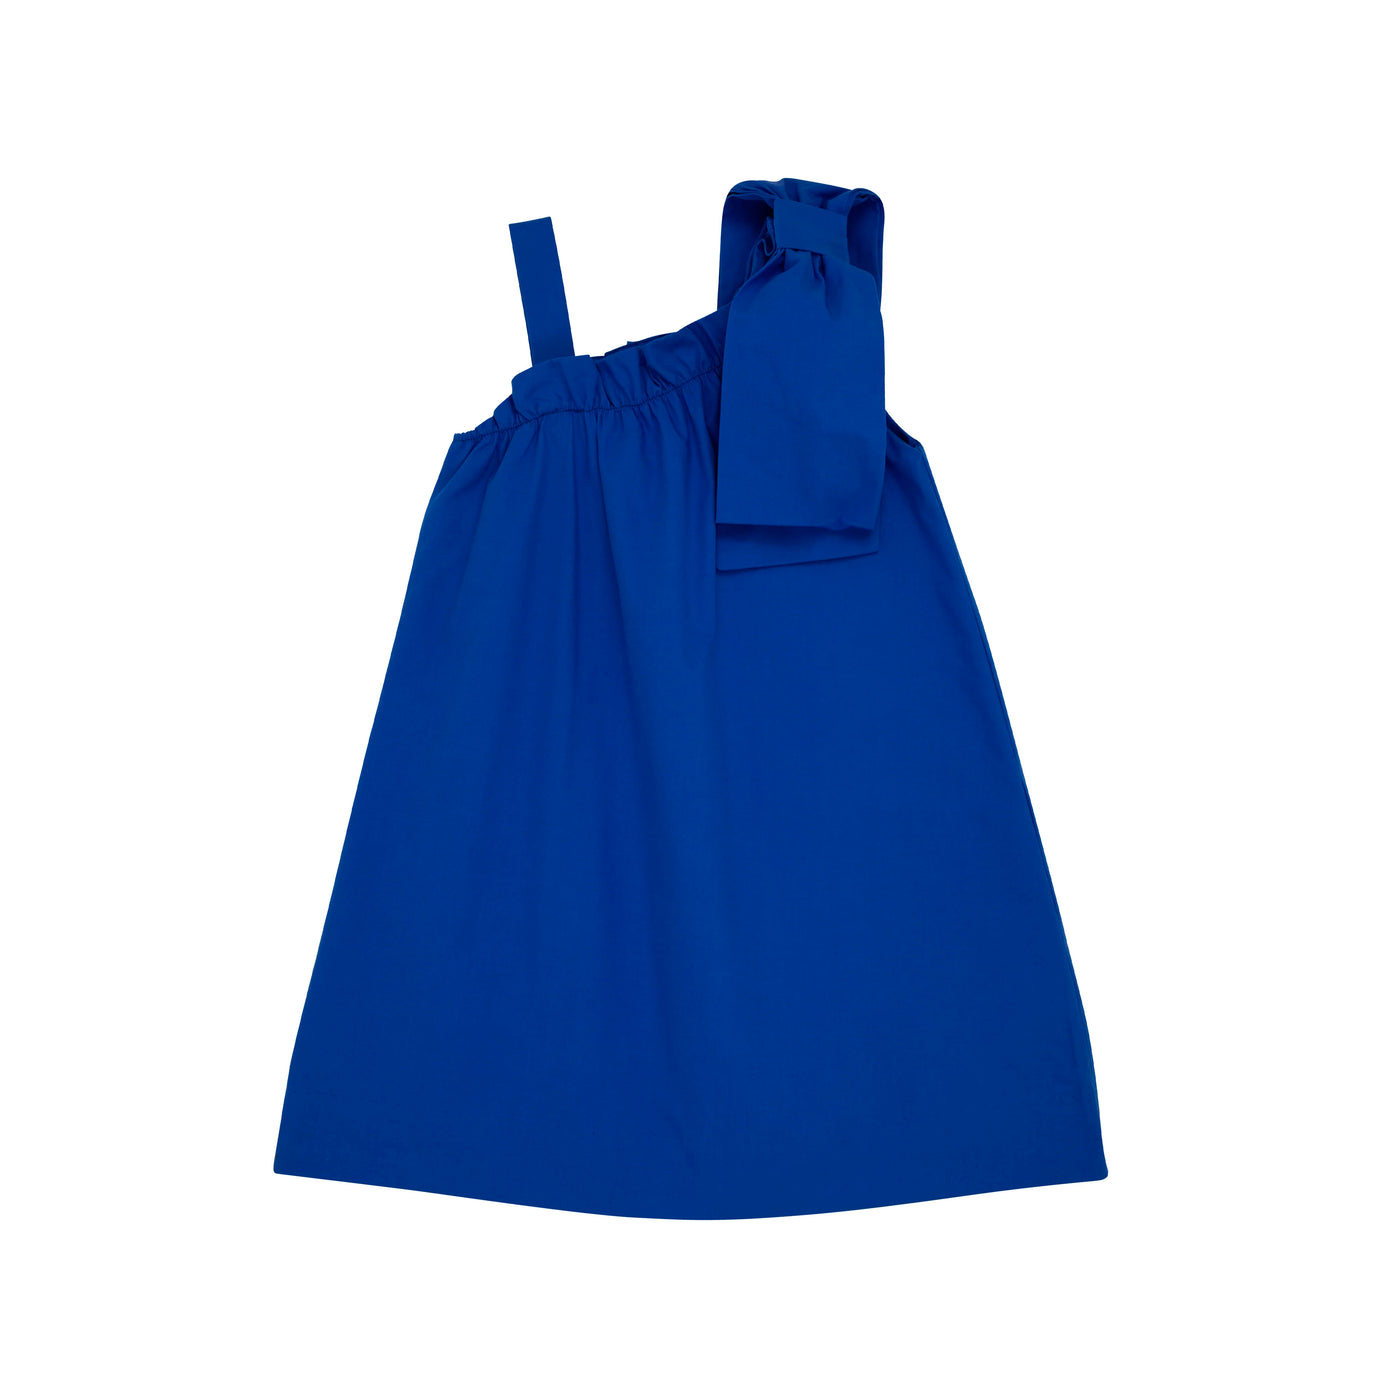 Maebelle Bow Dress - Rockefeller Royal Blue